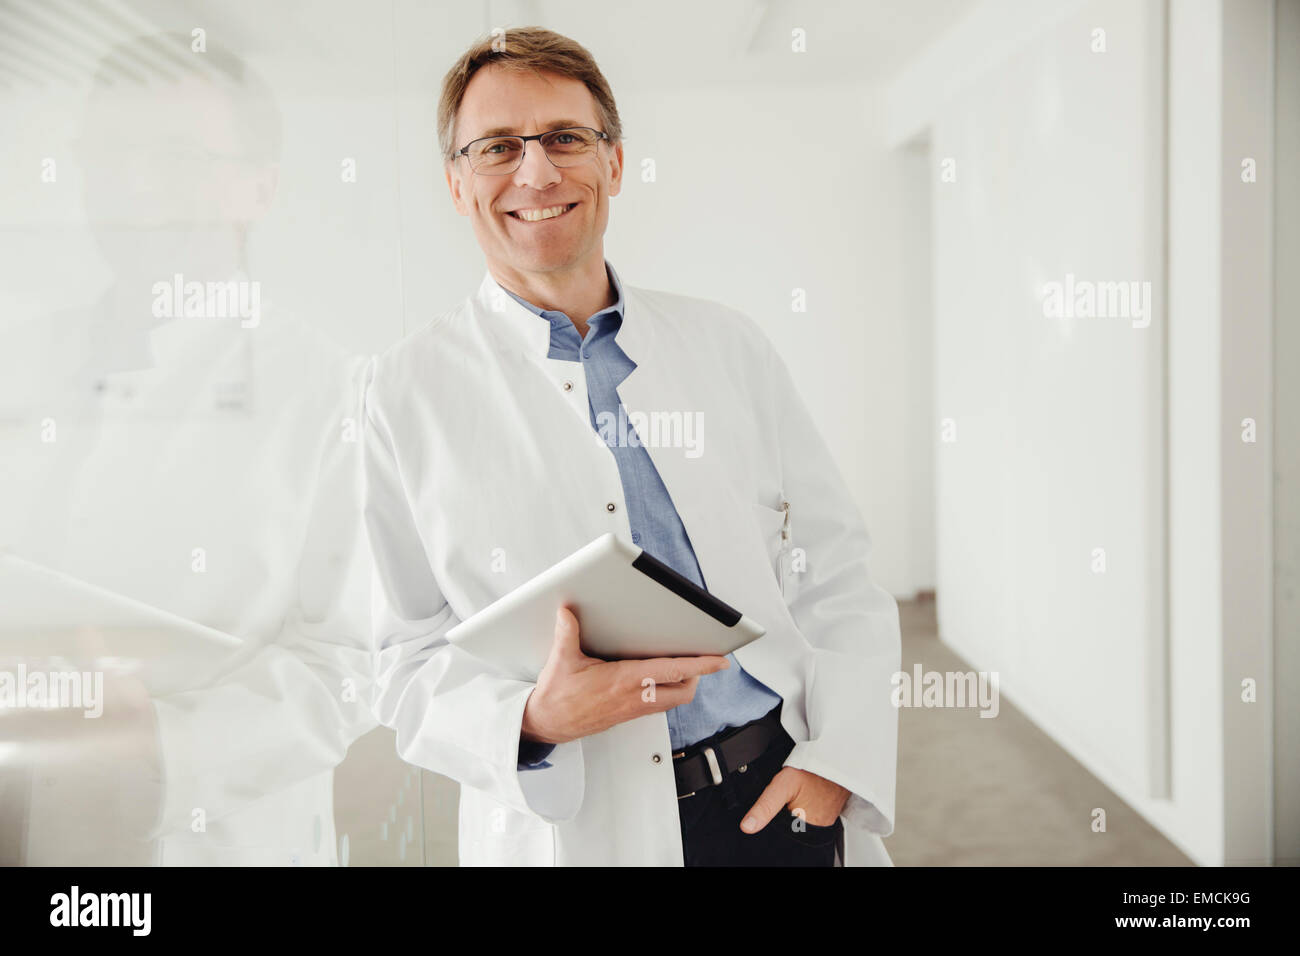 Smiling young man in lab coat holding digital tablet Banque D'Images